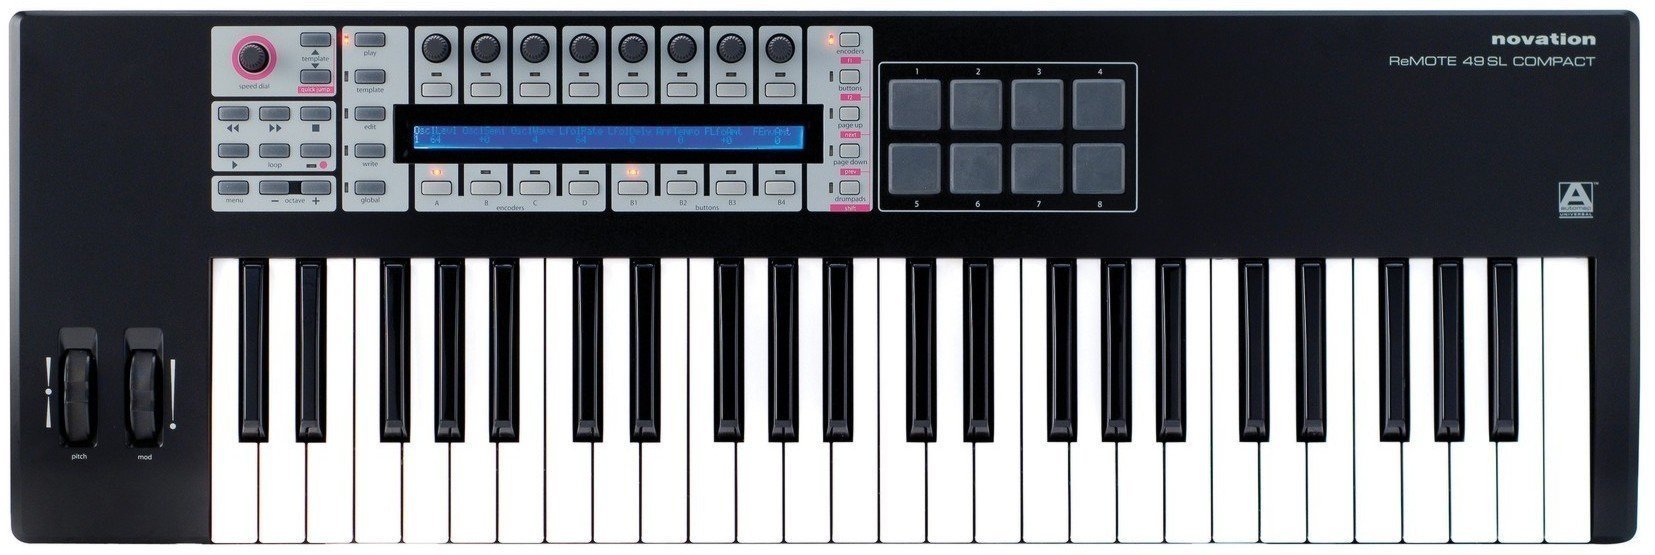 MIDI-Keyboard Novation Remote 49 SL COMPACT